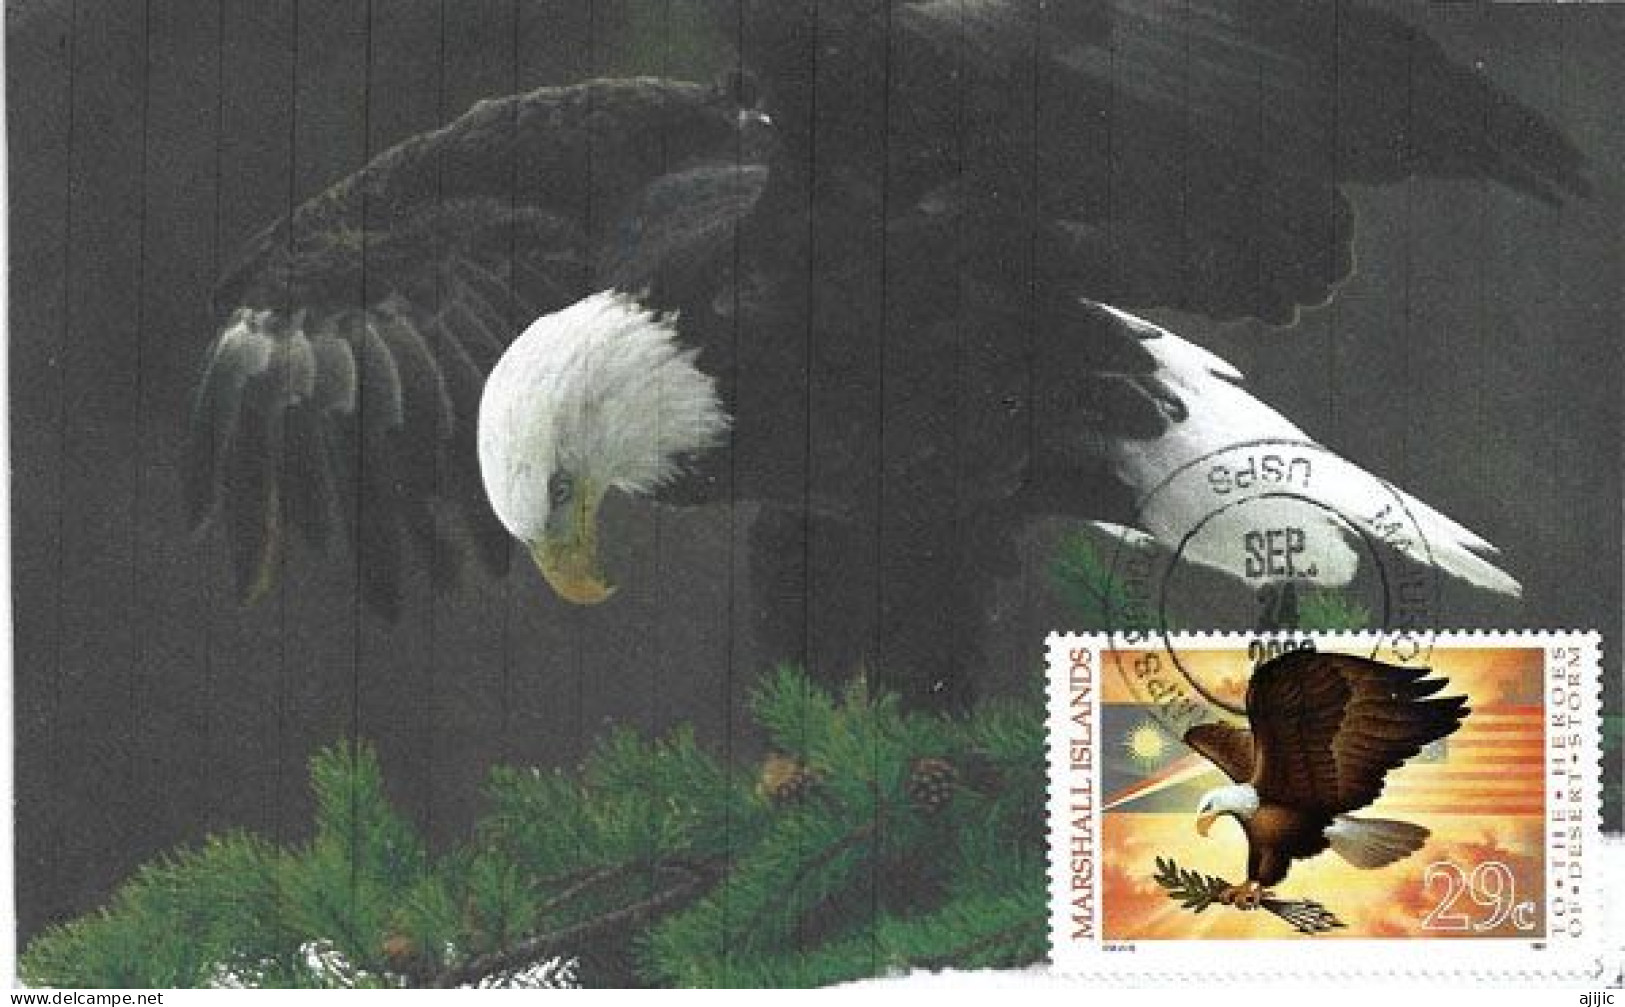 MARSHALL ISLAND: American Eagle (Bald Eagle)   MAXI-CARD From Majuro Marshall Islands - Eagles & Birds Of Prey